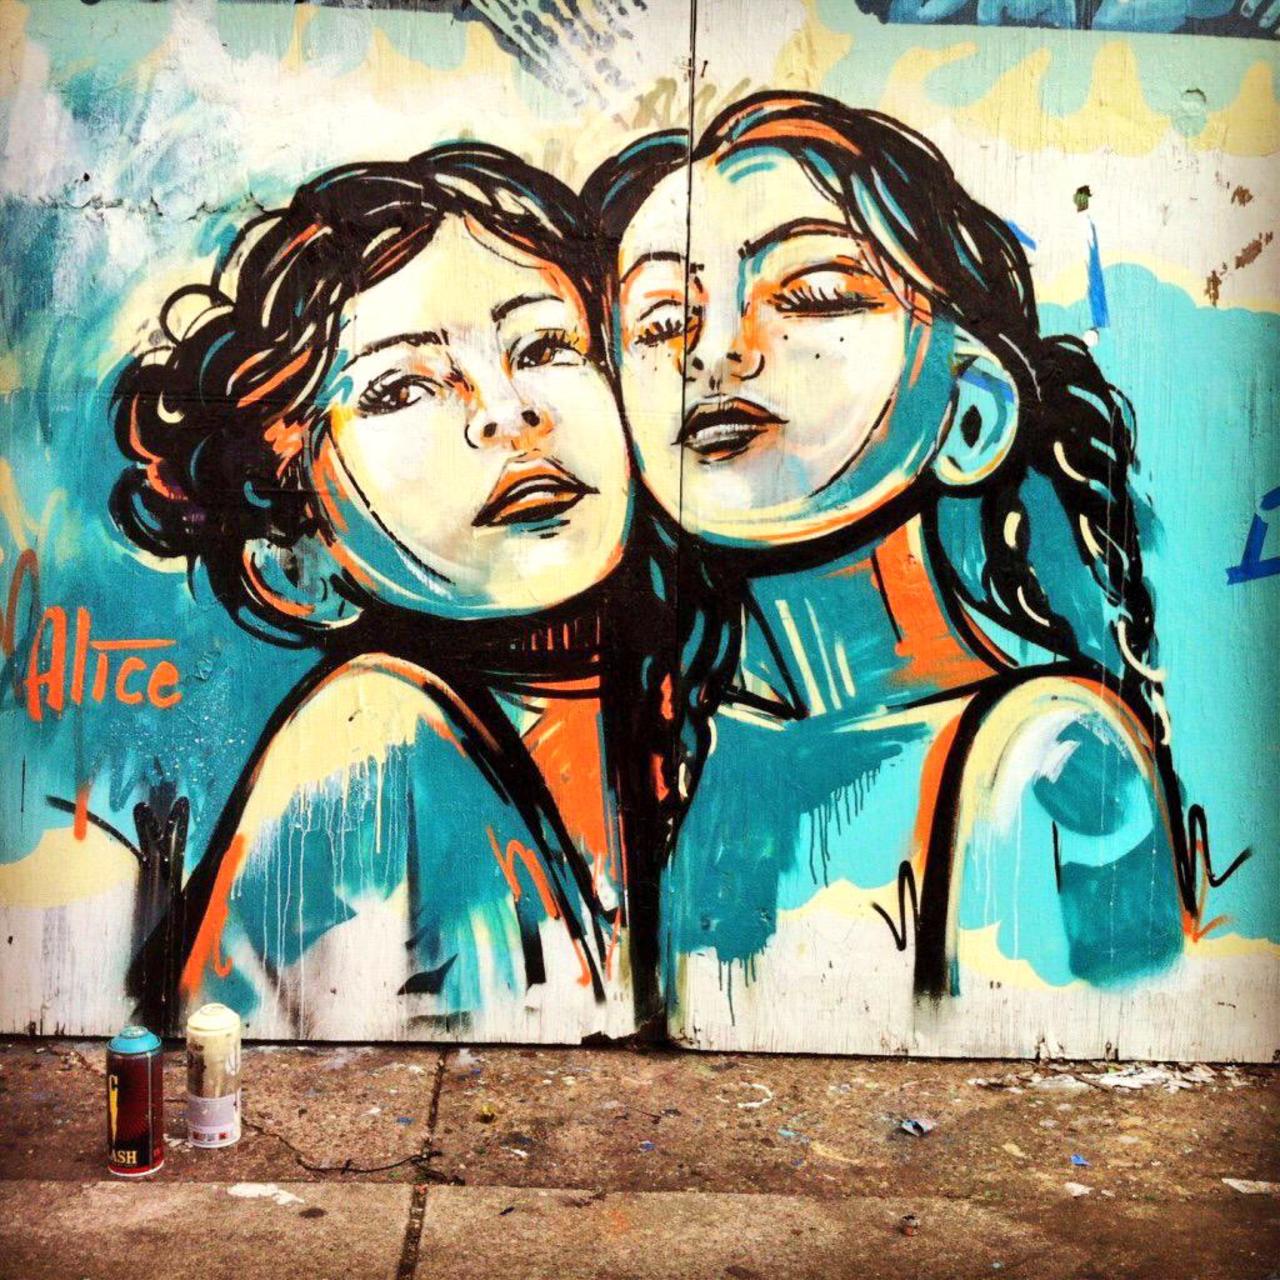 Alice Pasquini 
#streetart #art #graffiti http://t.co/JTAkEAi9gW